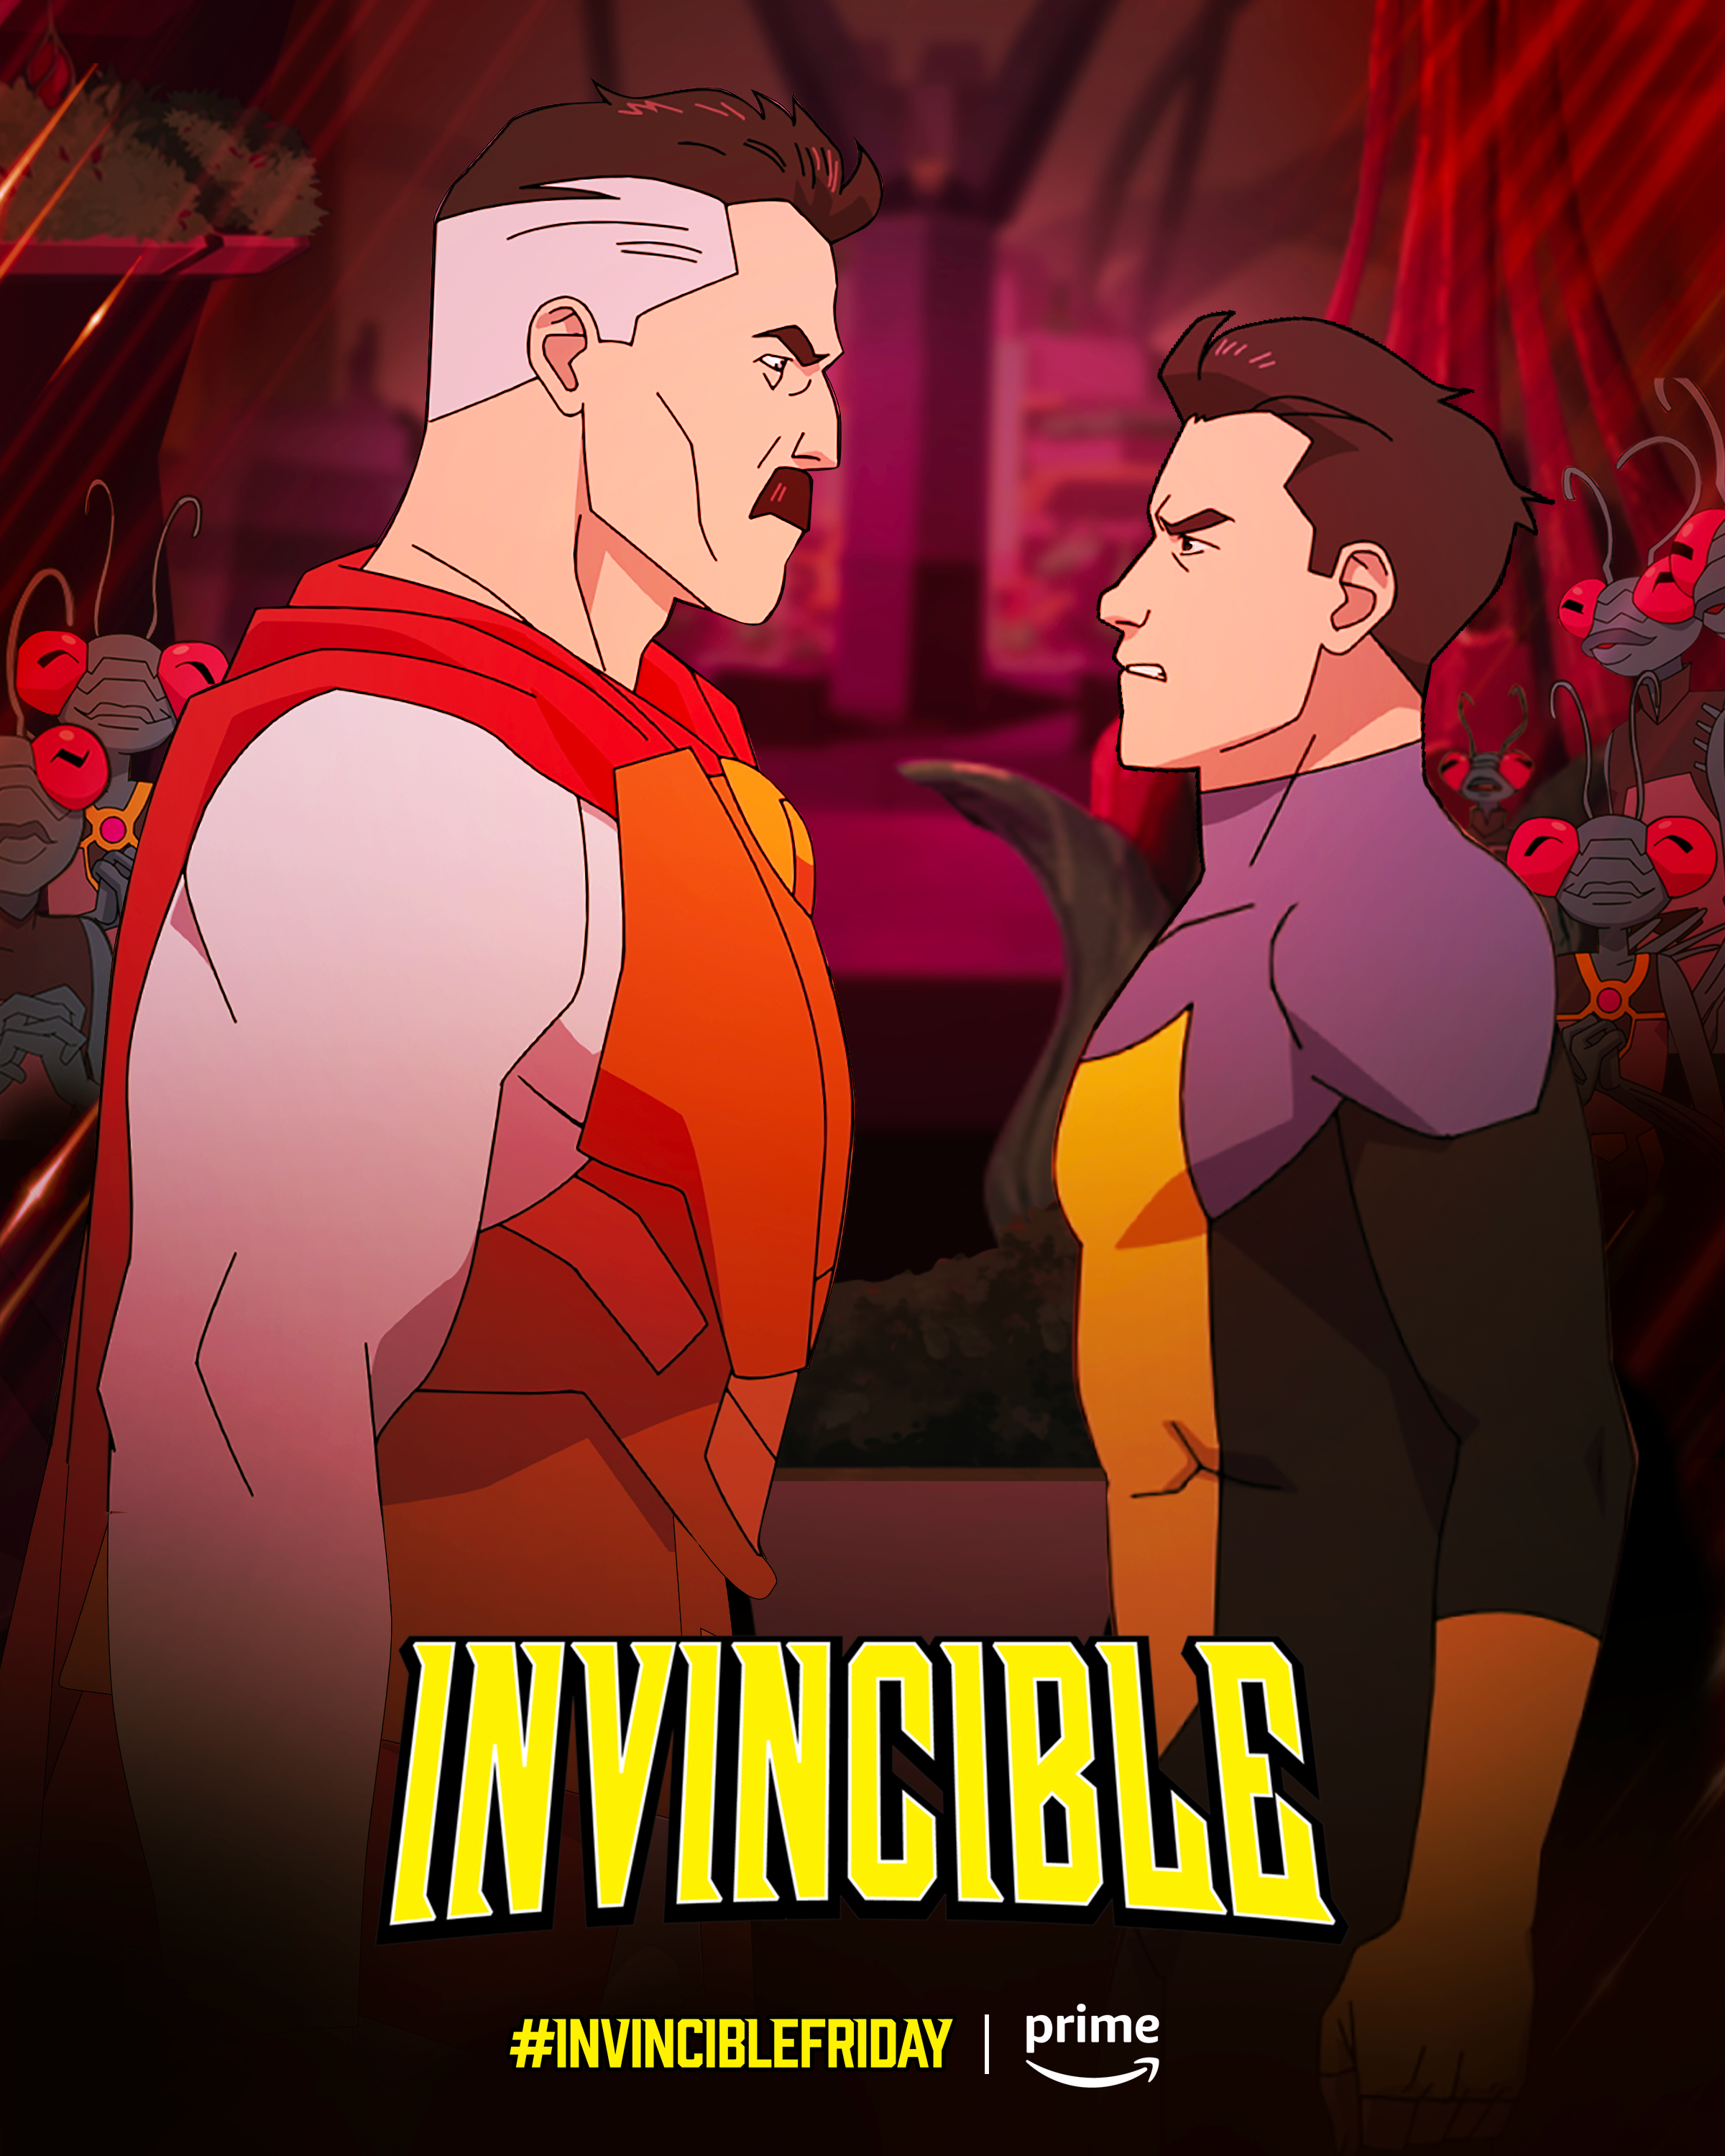 Invincible Season 2 Episode 4 Release Date and Predictions